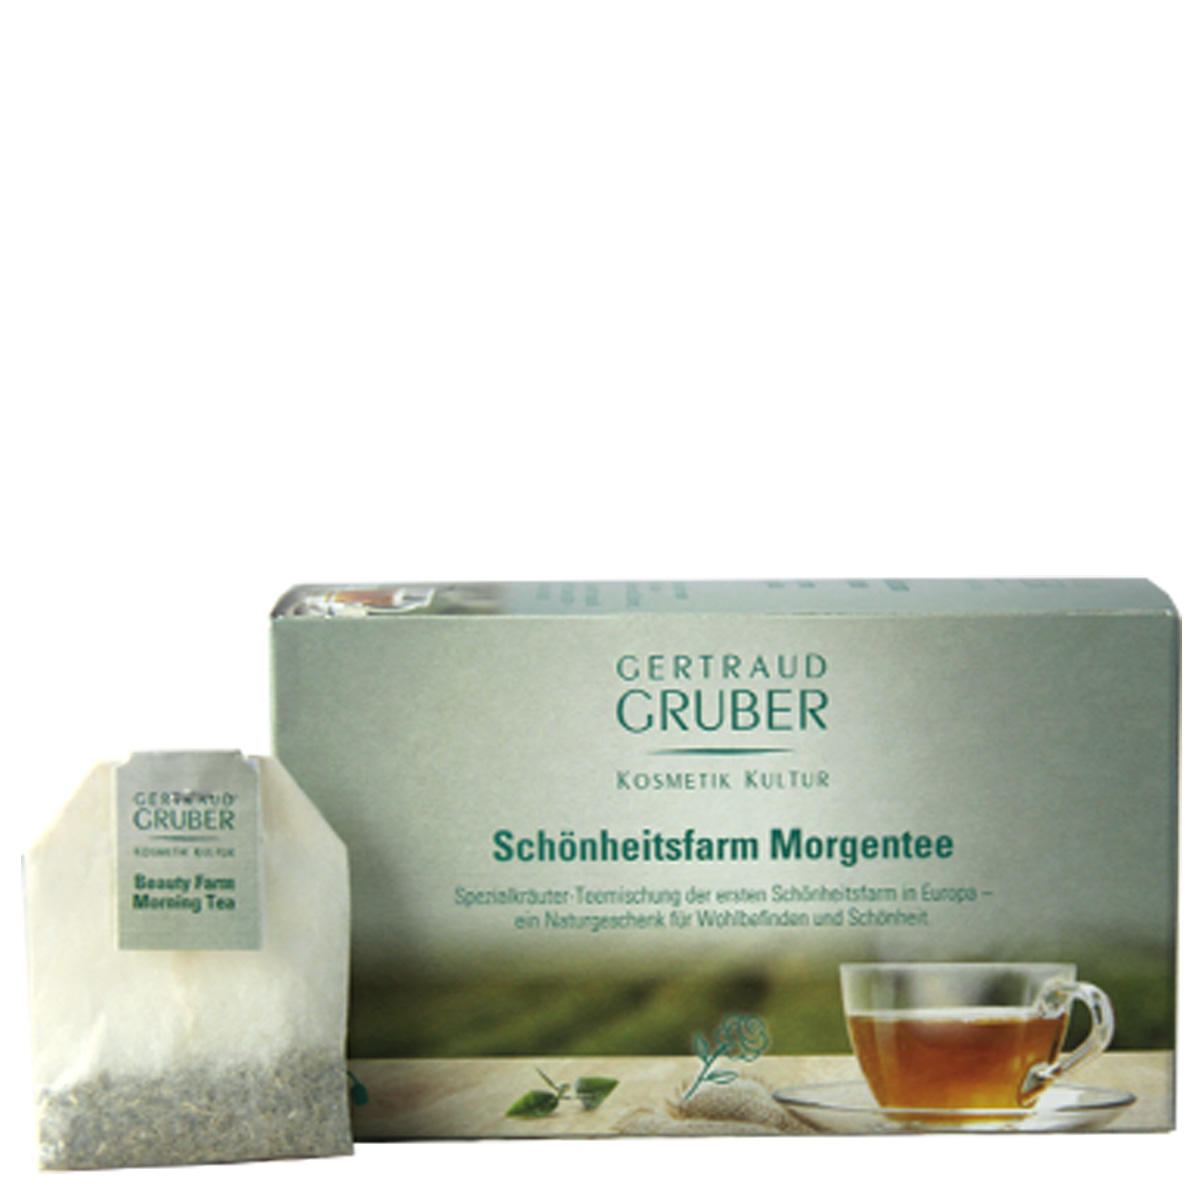 GERTRAUD GRUBER Beauty farm morning tea Pro Packung 20 Stück - 1